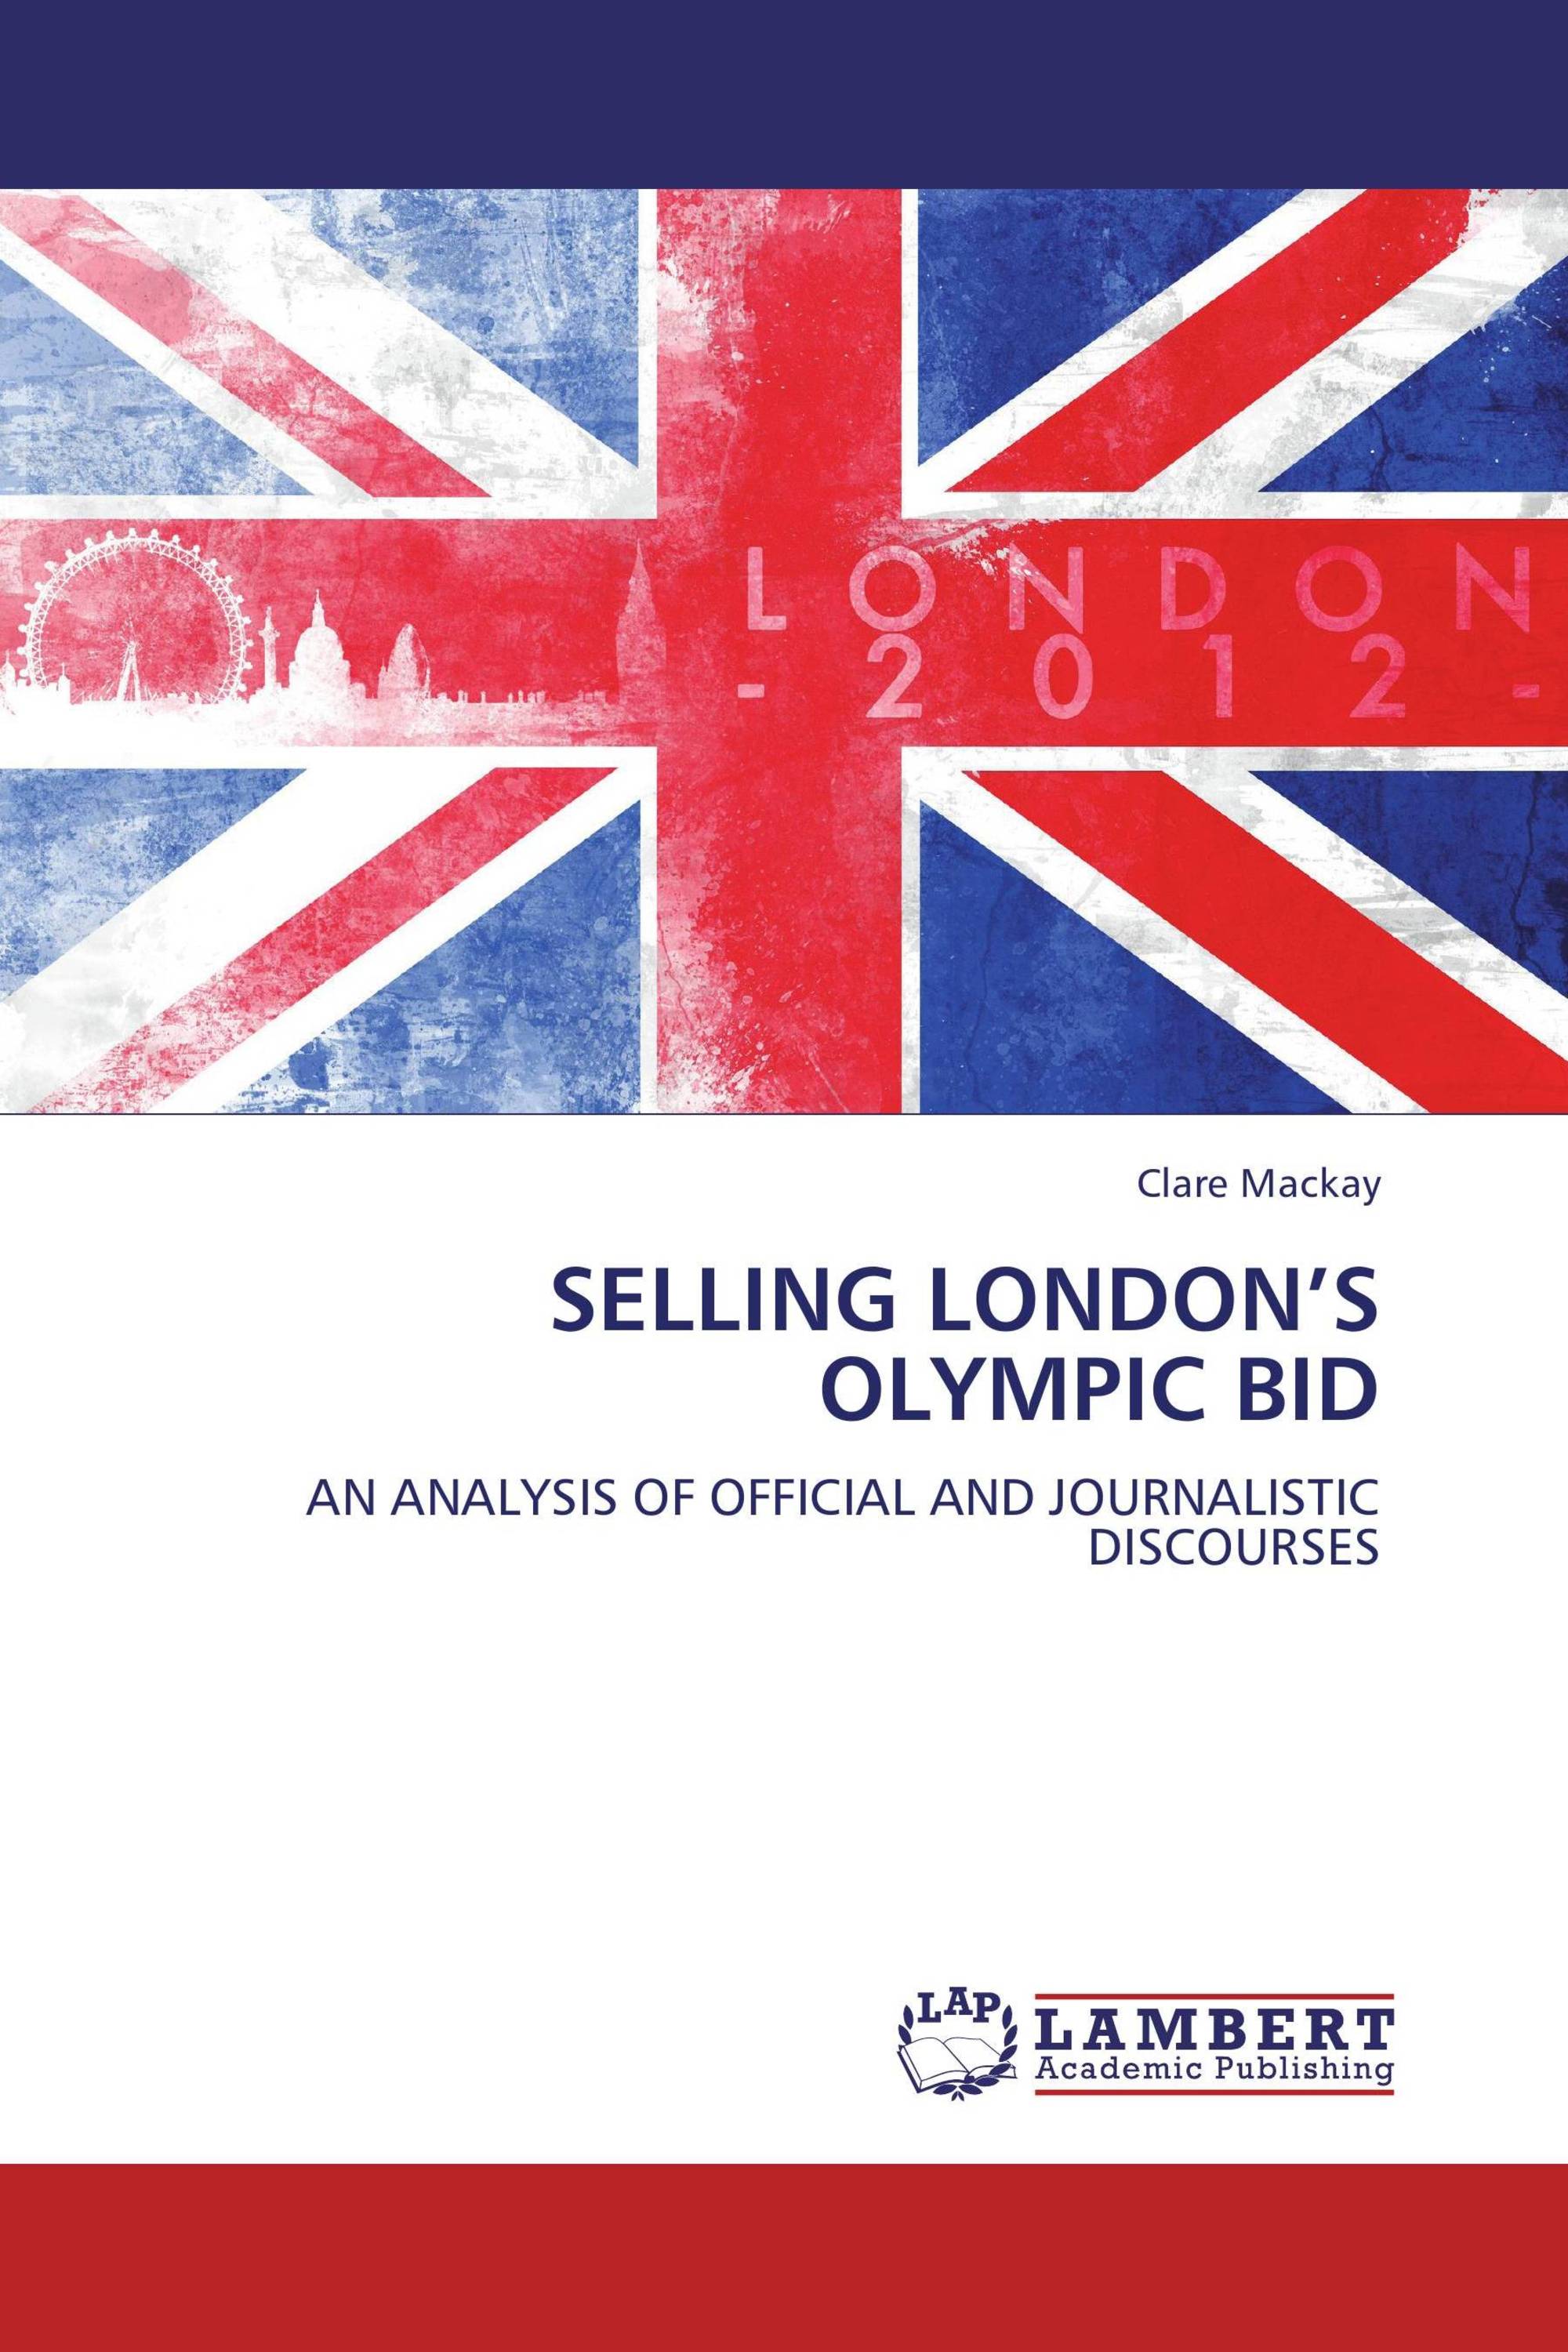 SELLING LONDON’S OLYMPIC BID